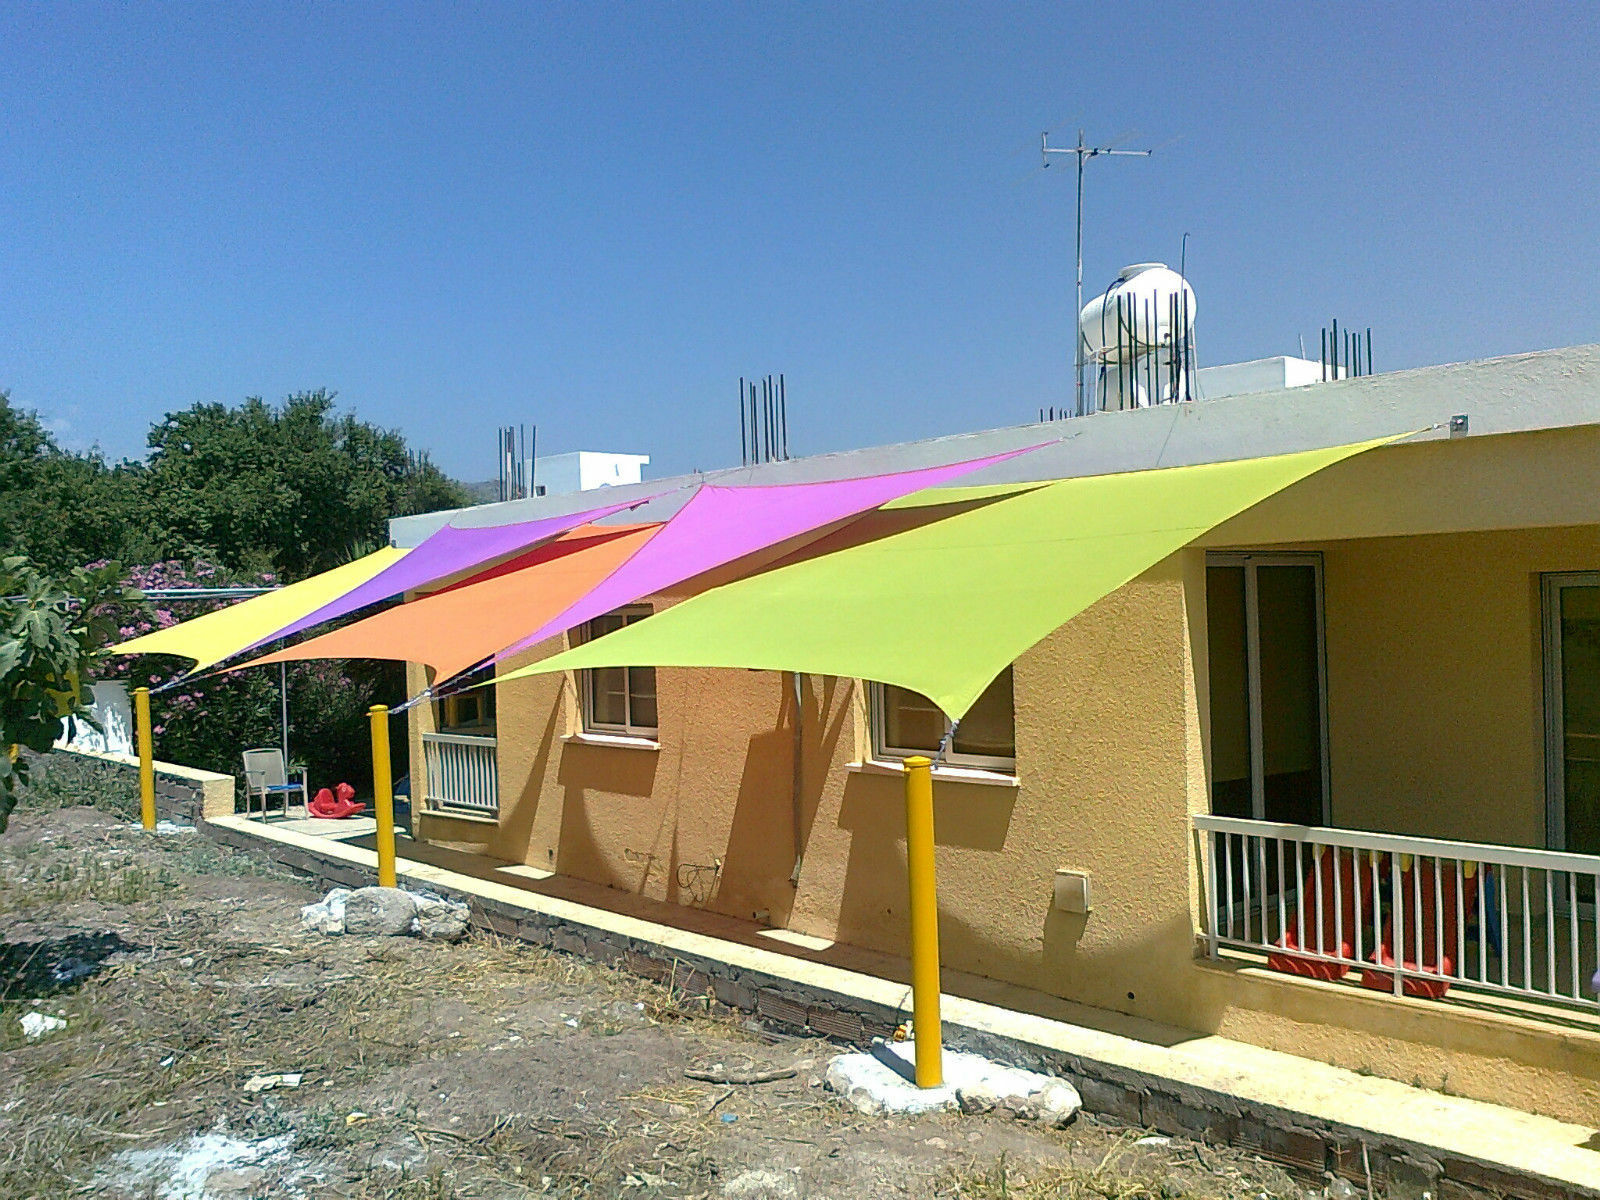 Kookaburra Shade Sail Waterproof Sun Canopy Patio Awning Garden 98%UV Block